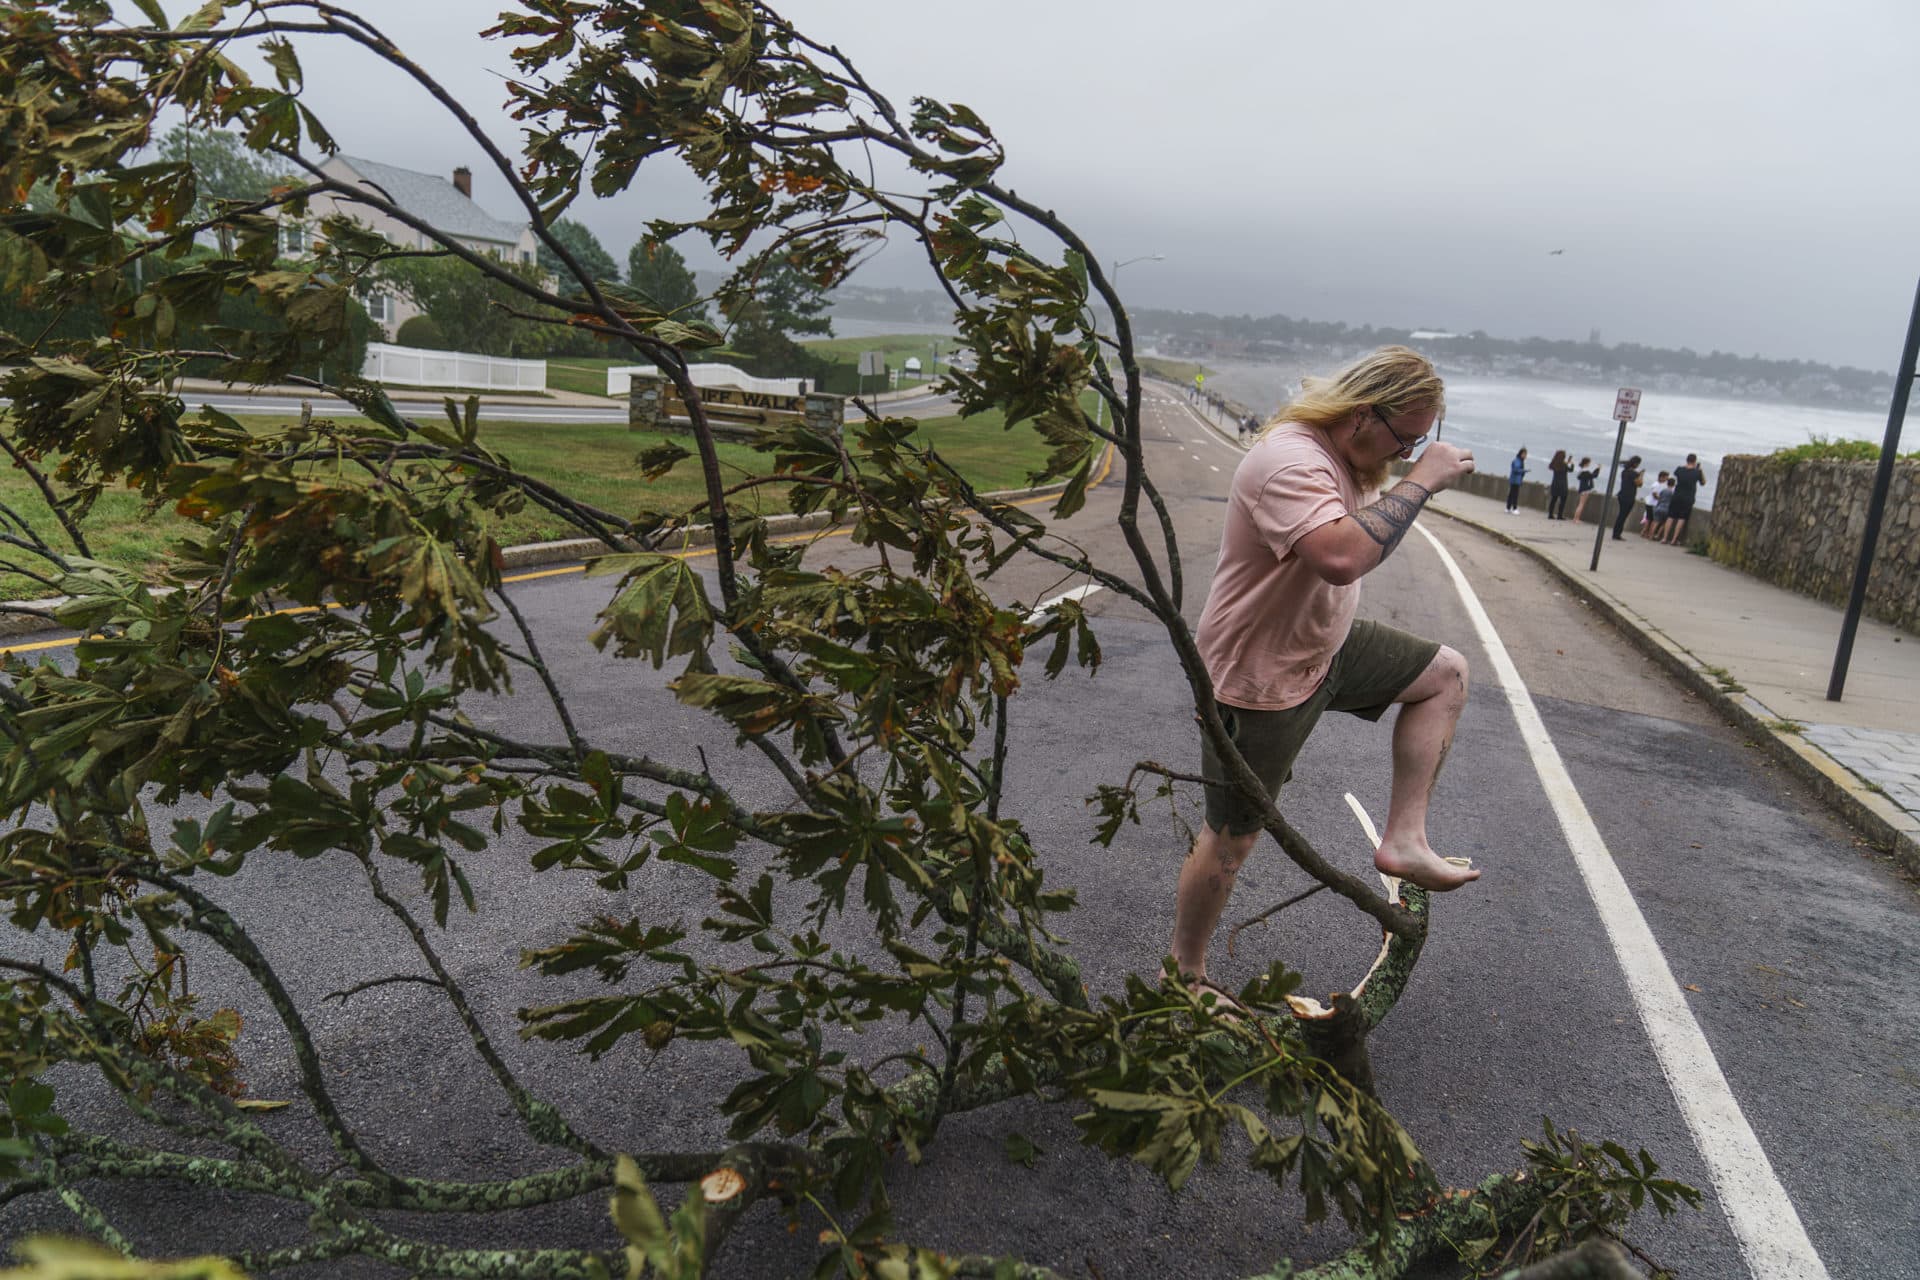 Zeke Baker steps over a fallen tree branch while clearing debris from a sidewalk in Newport, R.I. (David Goldman/AP)